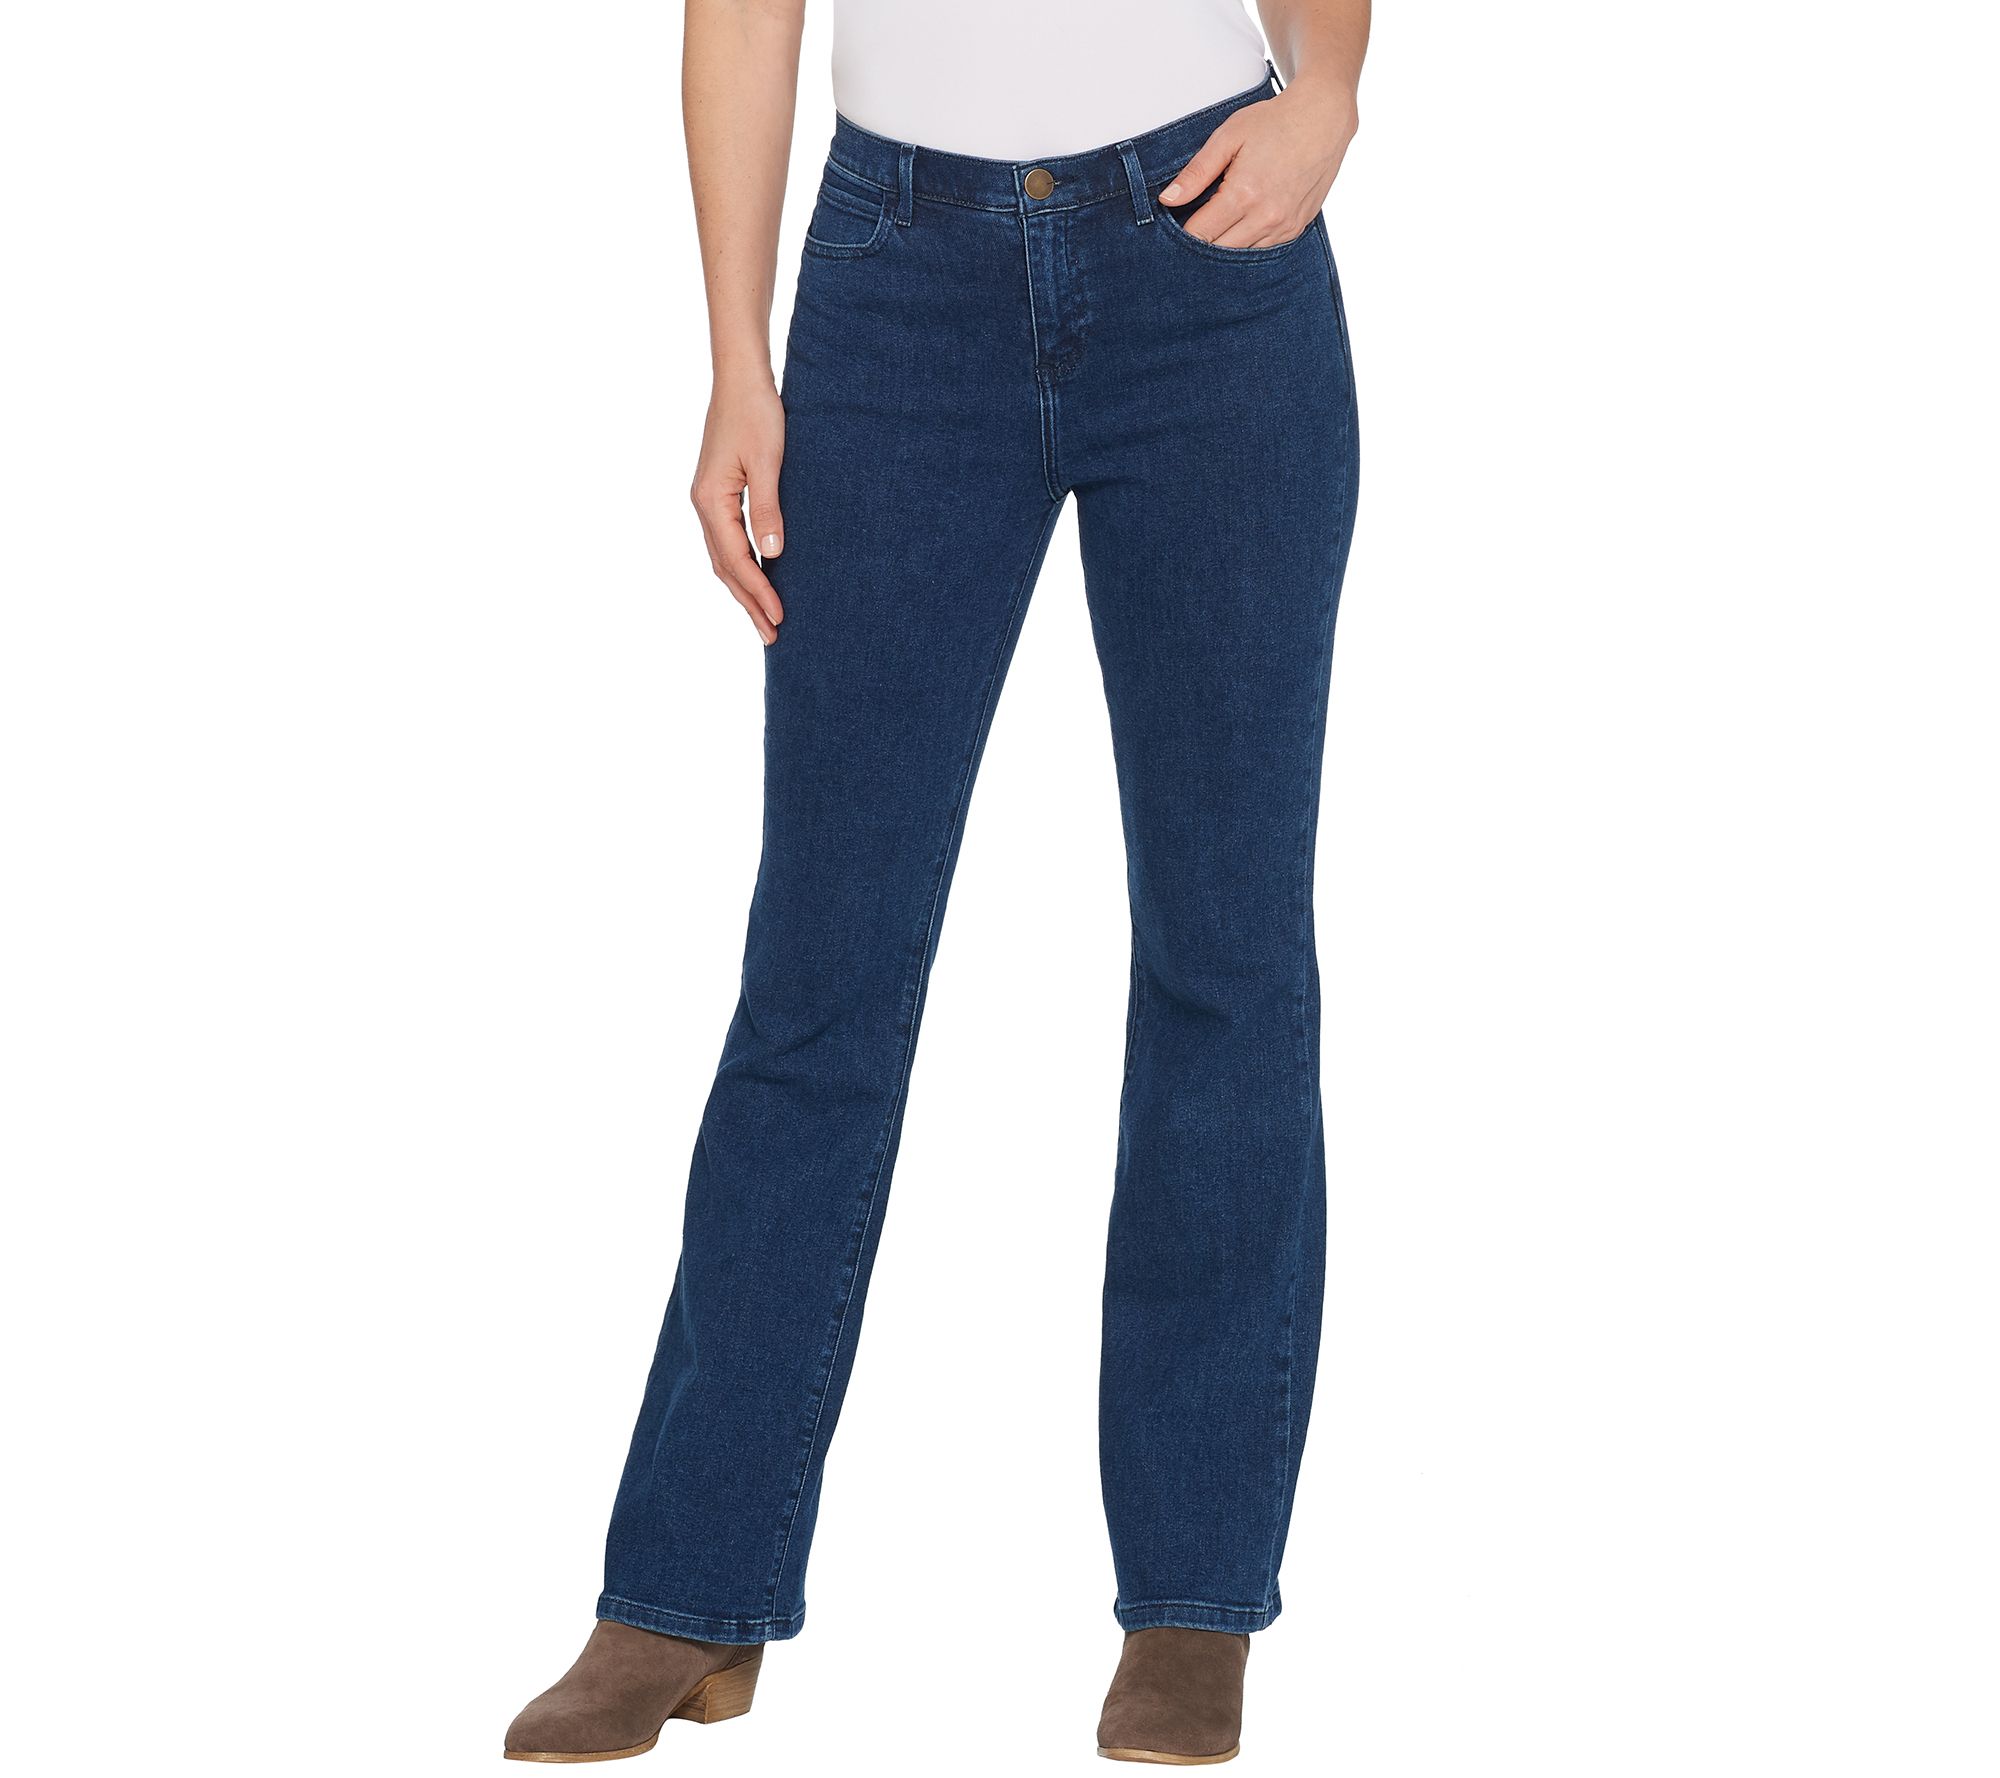 BROOKE SHIELDS Timeless Regular Boot-Cut Jeans - QVC.com